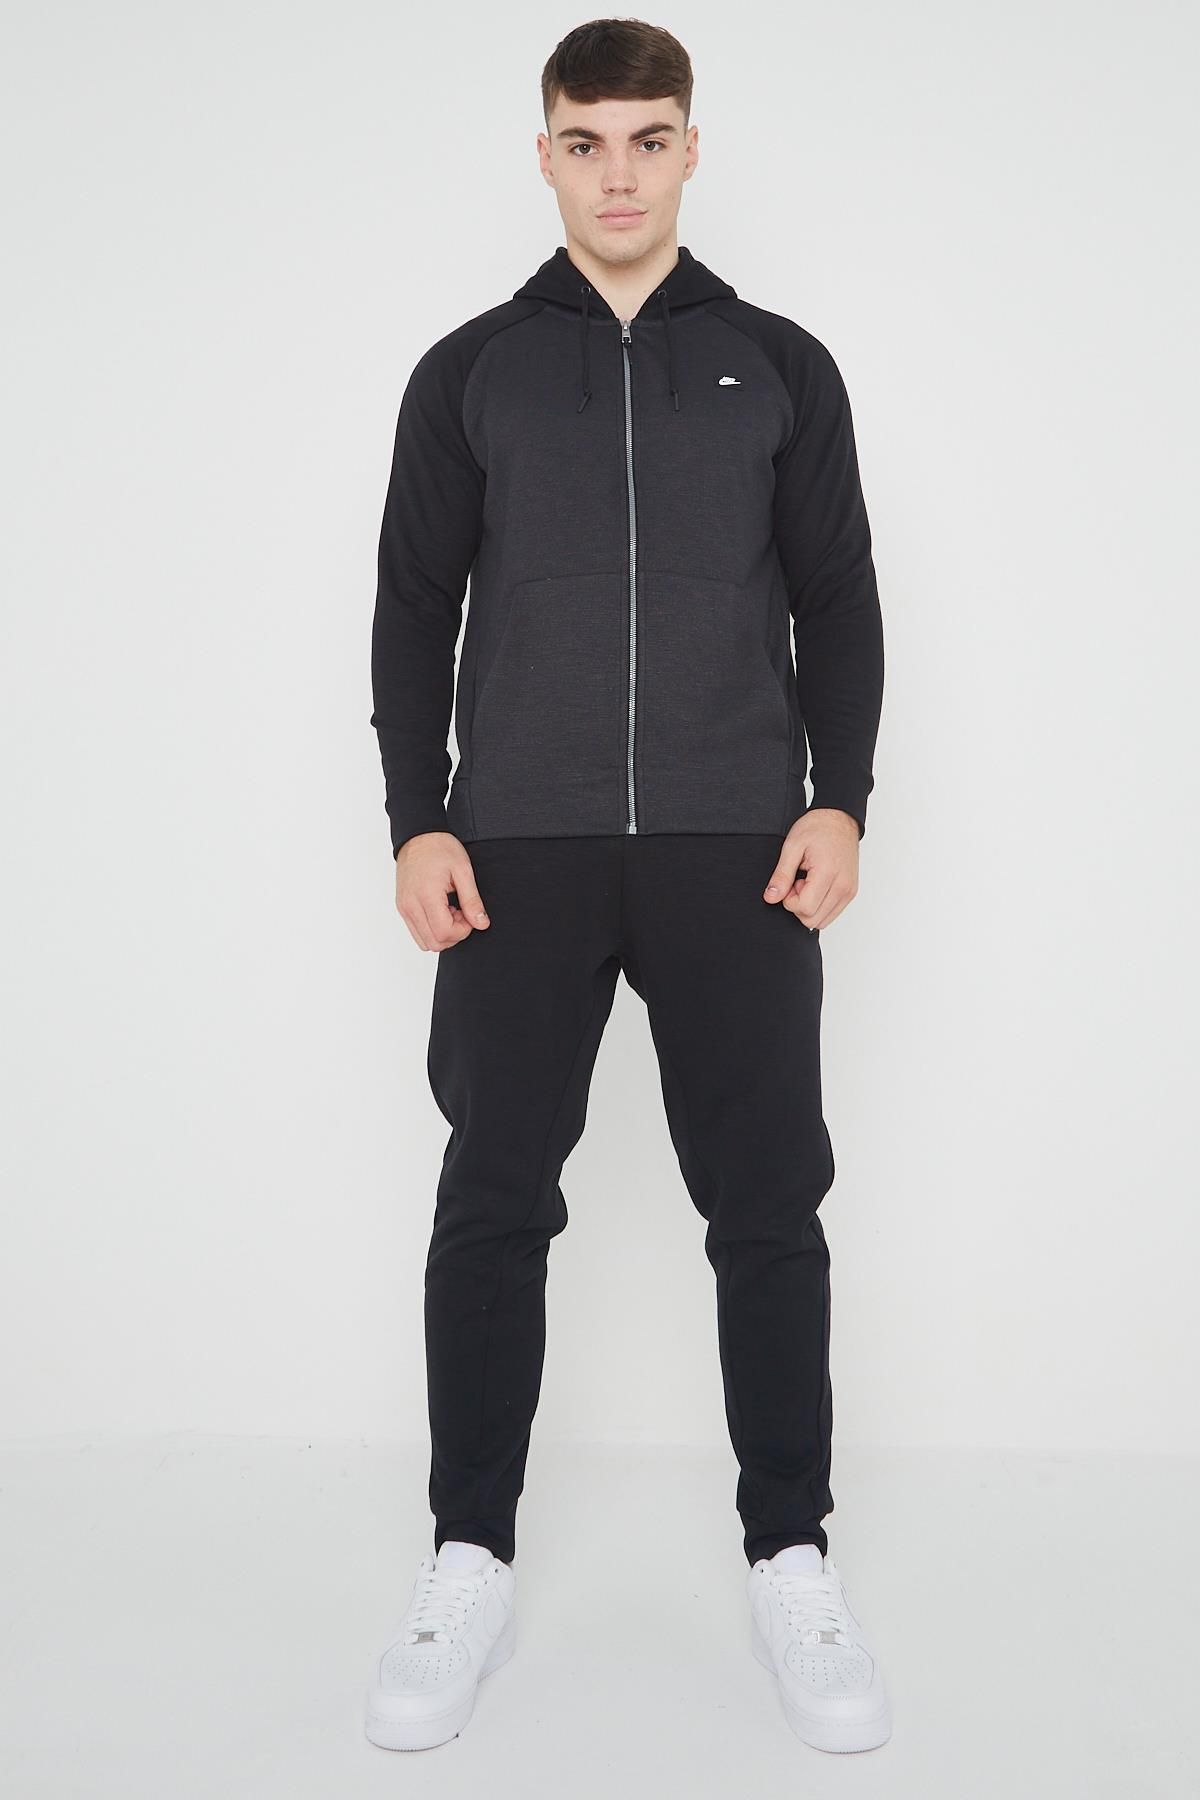 Nike Mens Sportswear Optic Tracksuit in Black